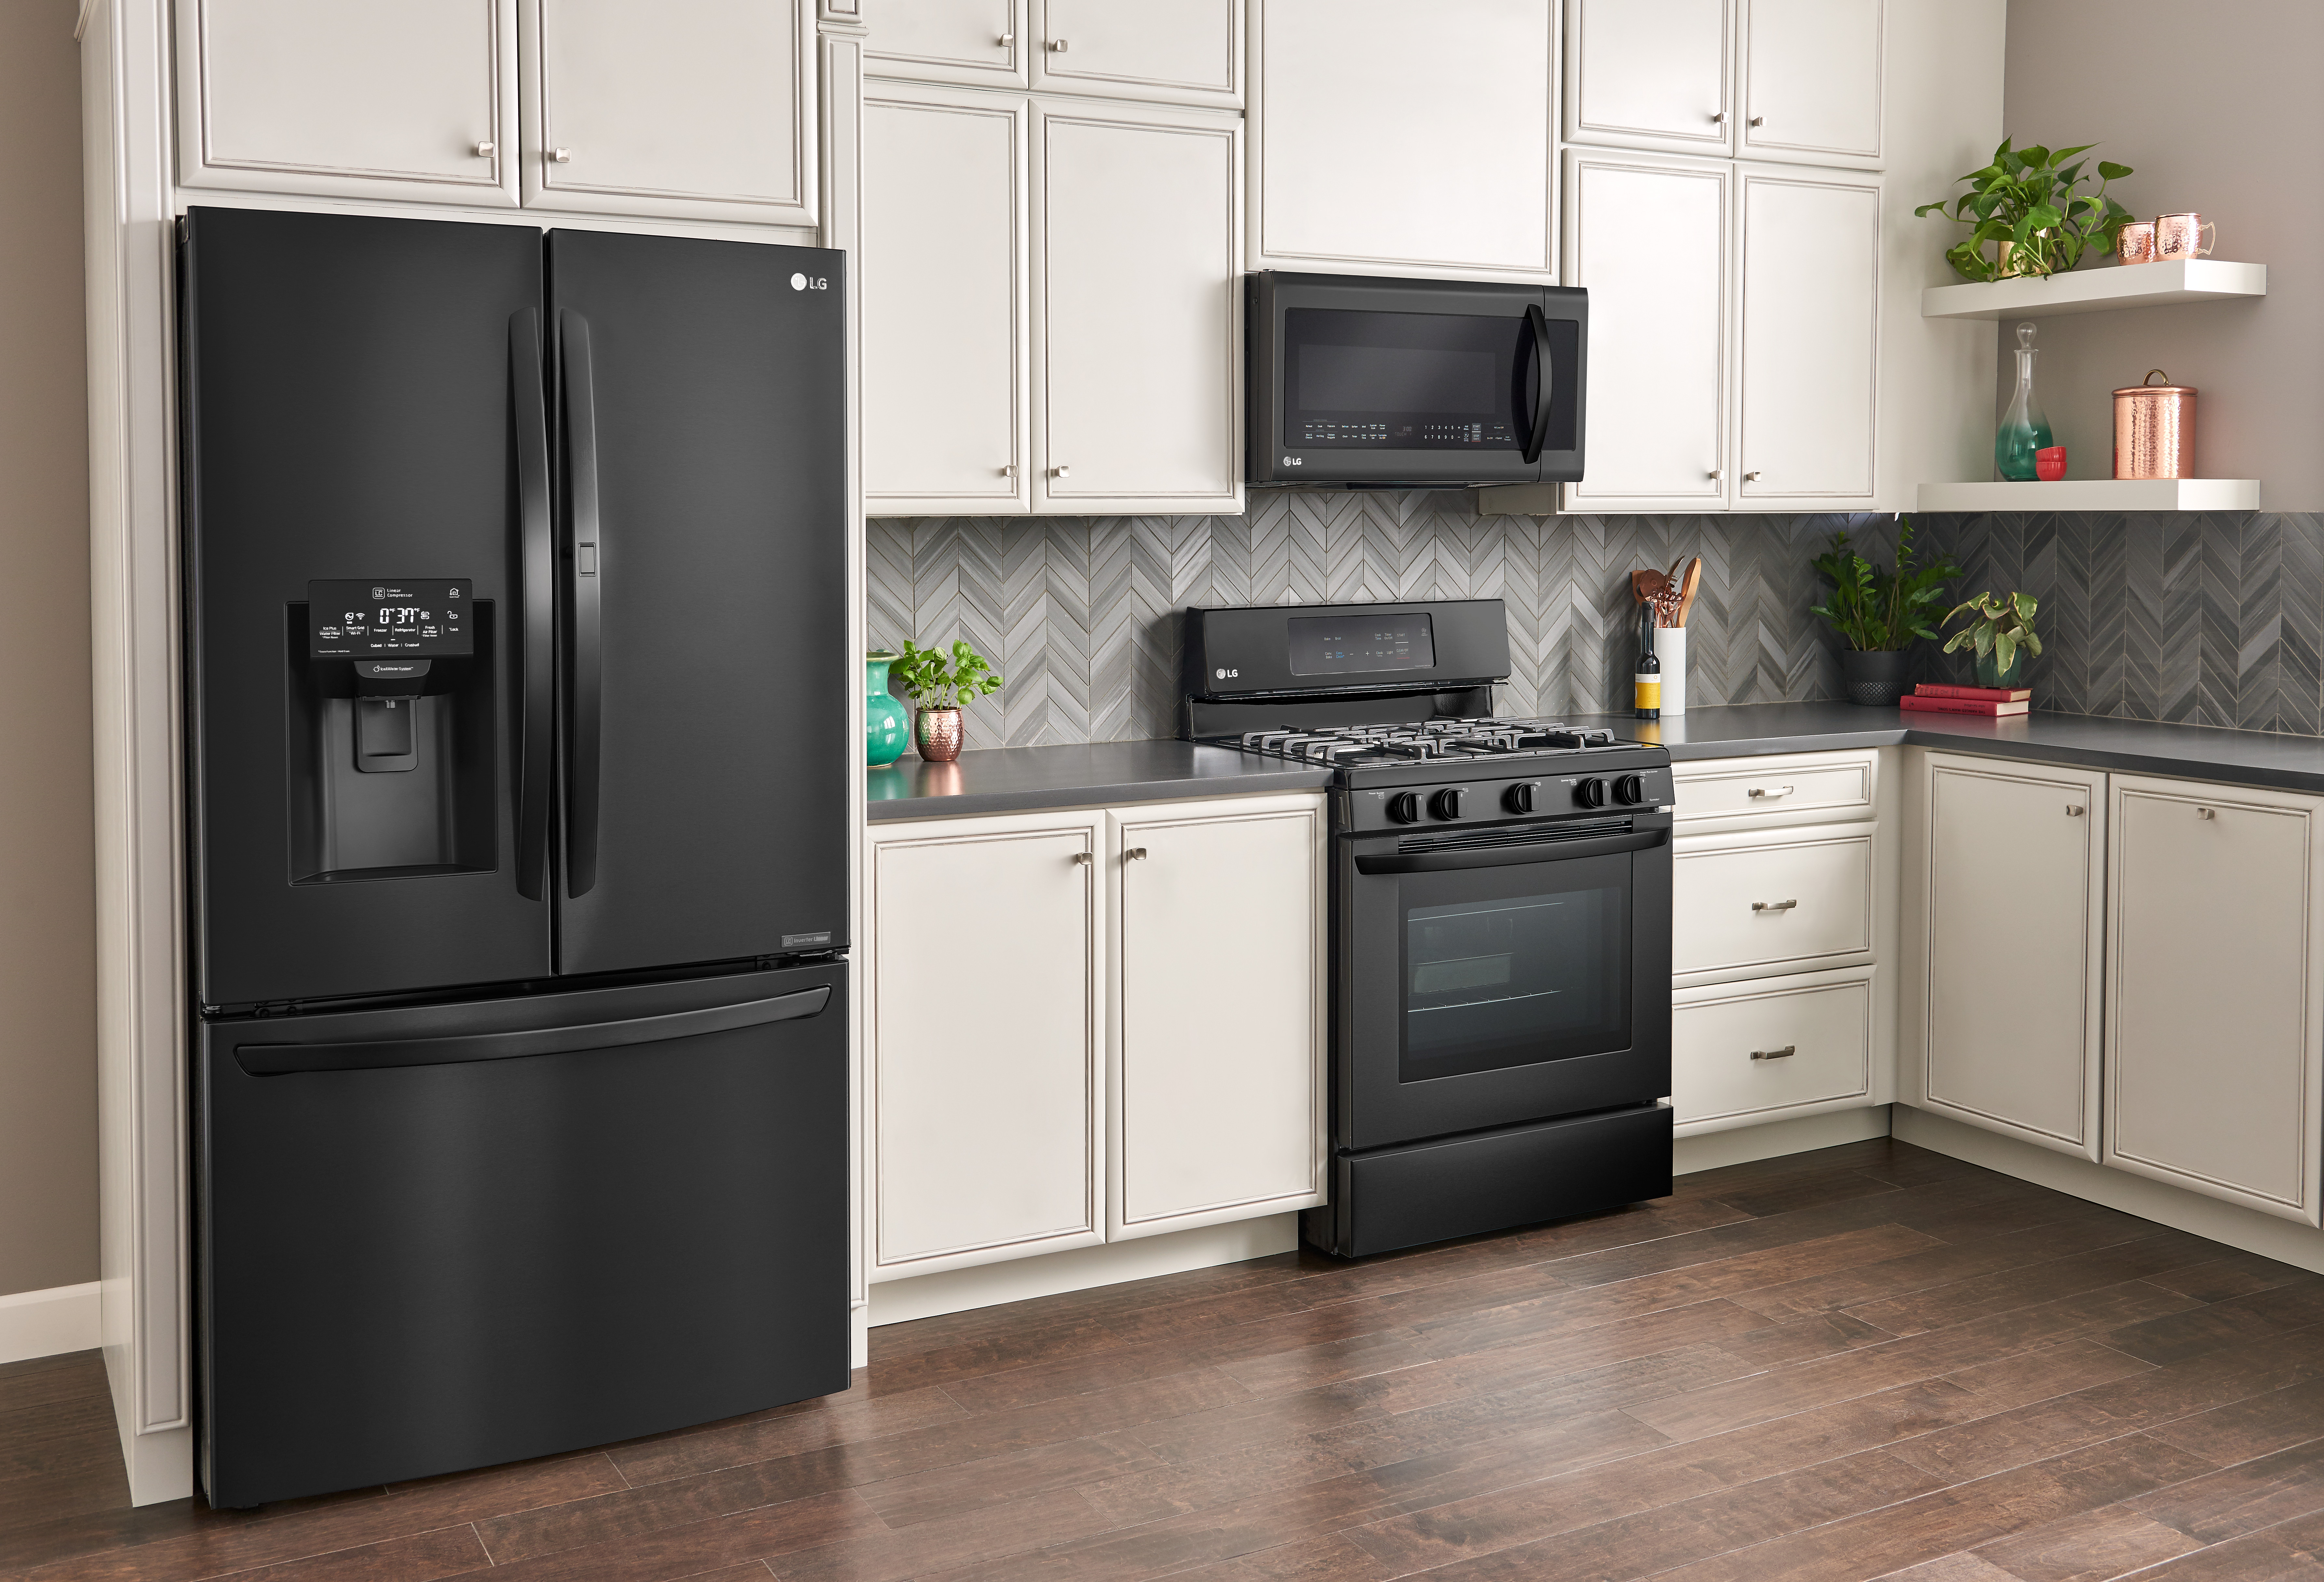 LG Kitchen Appliances At Best Buy